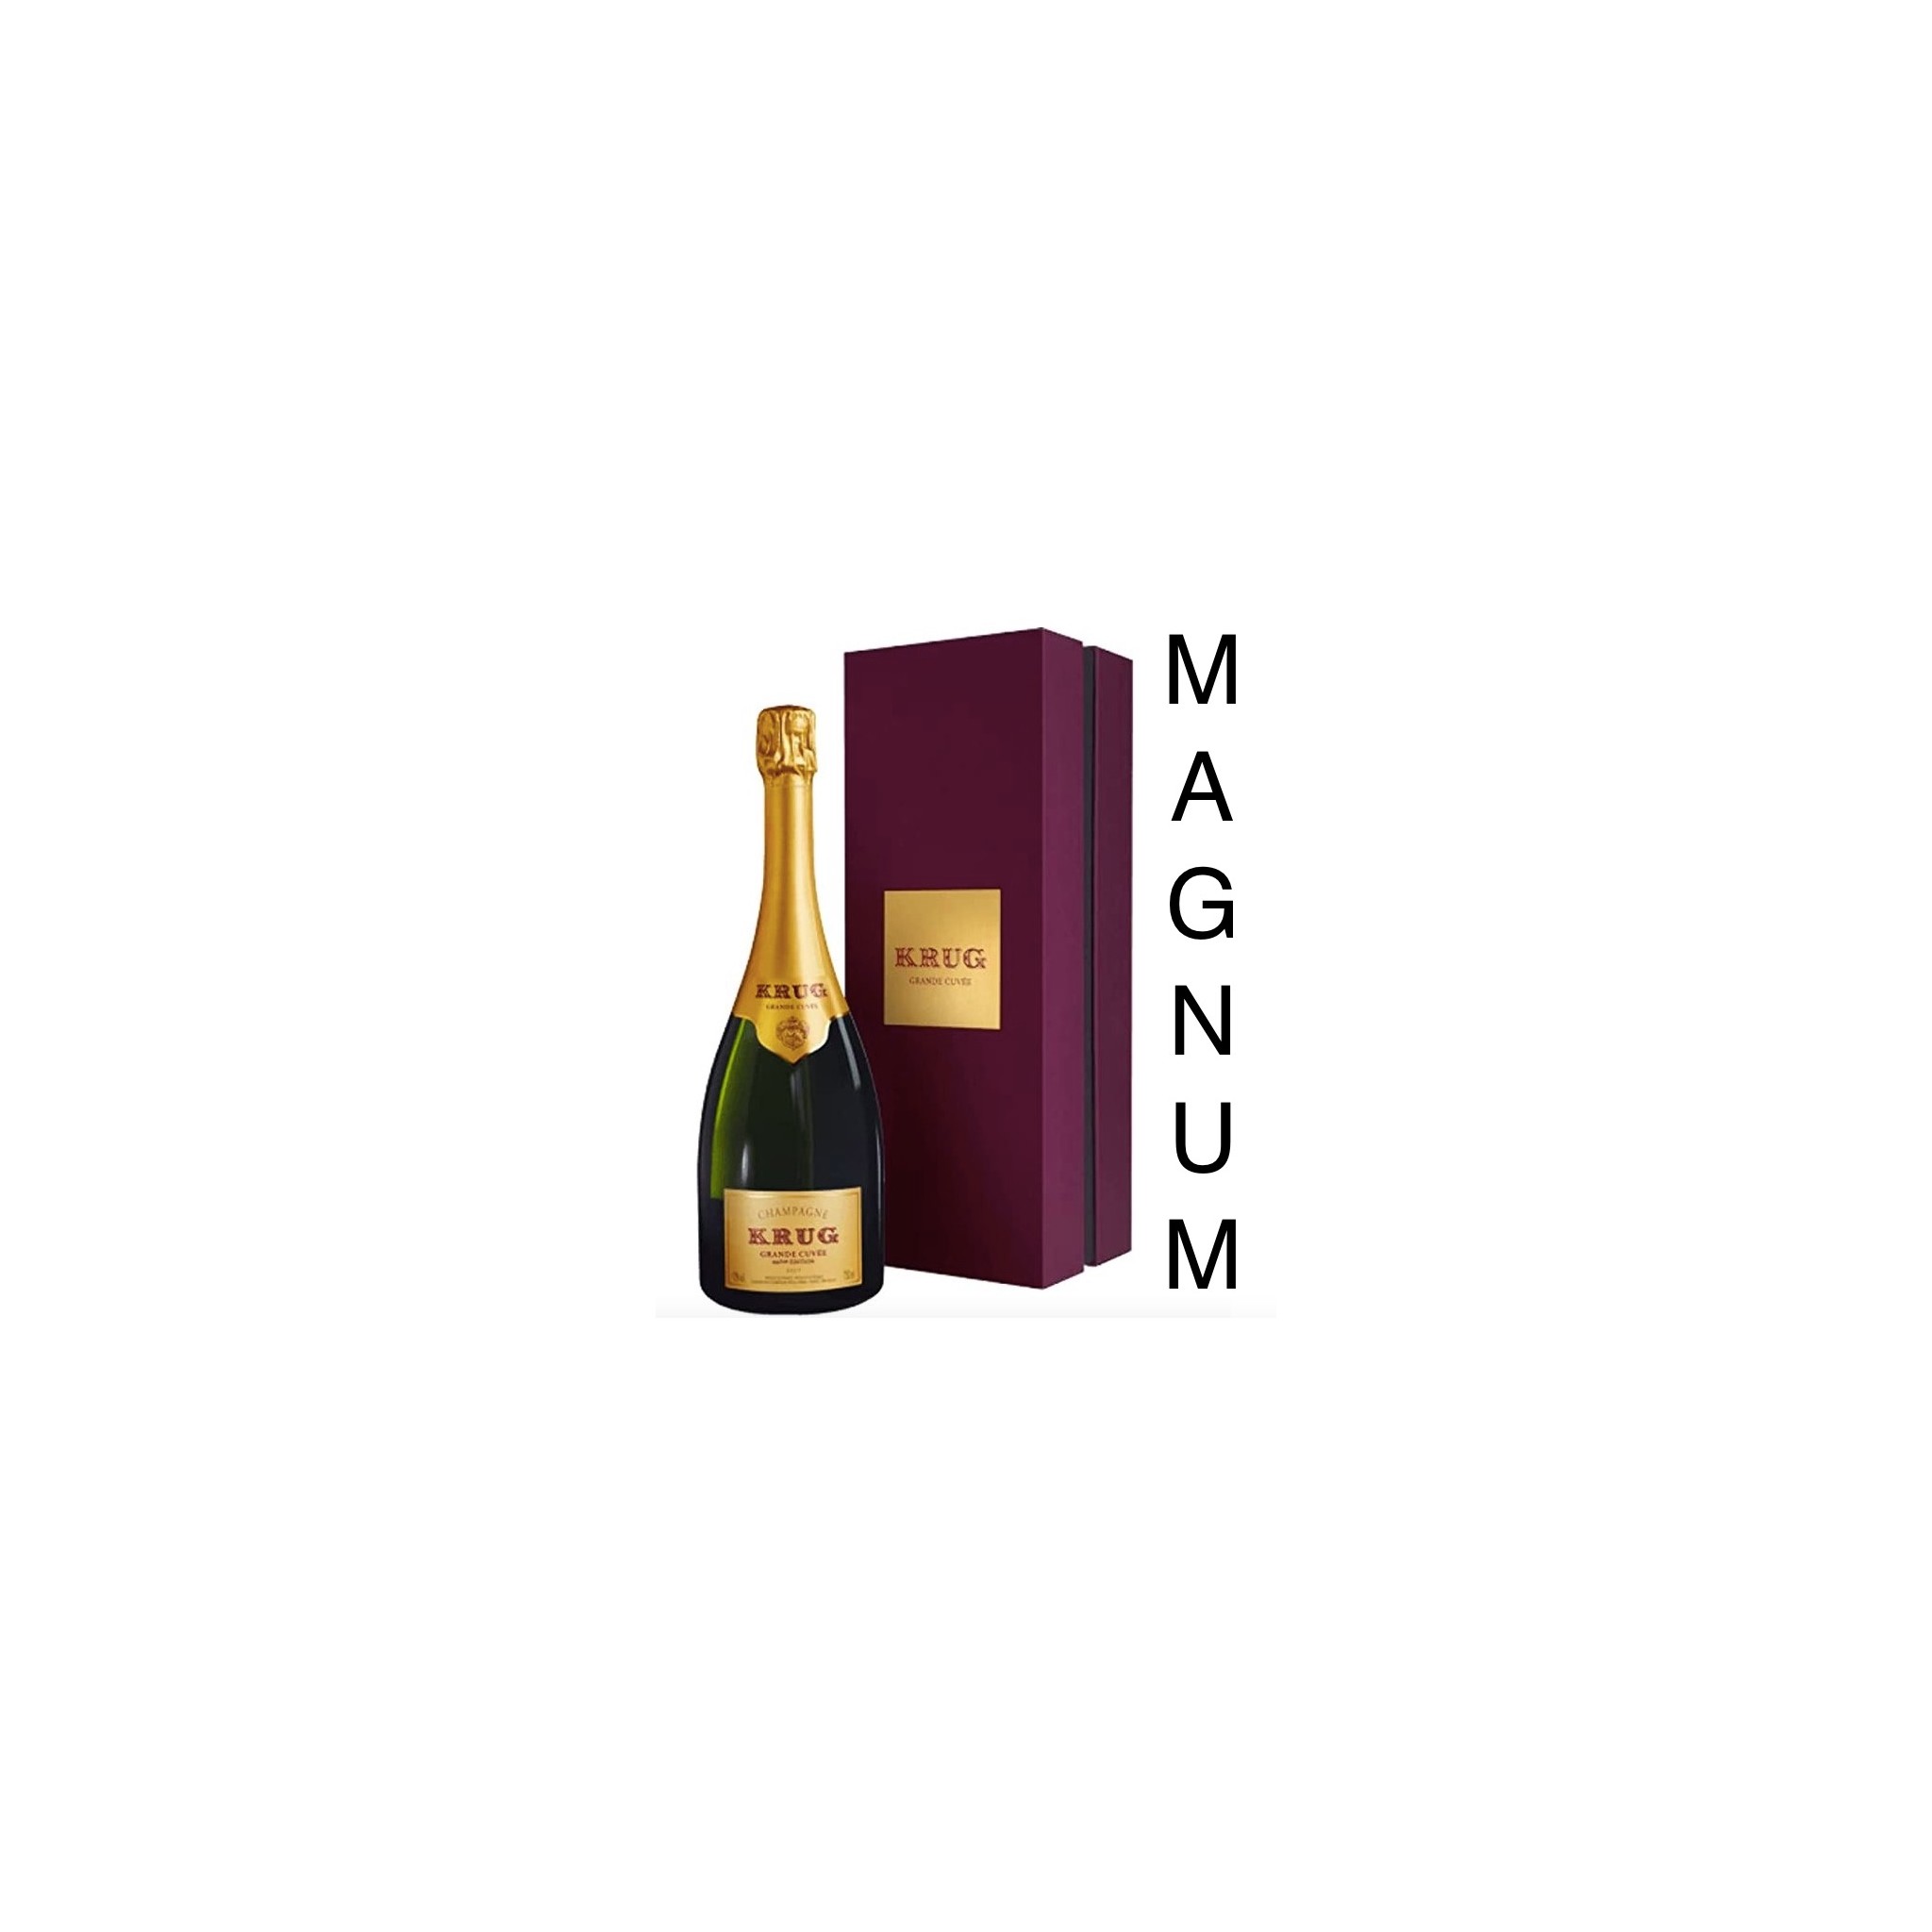 Krug 168 edition magnum shop online price champagne quality corso101